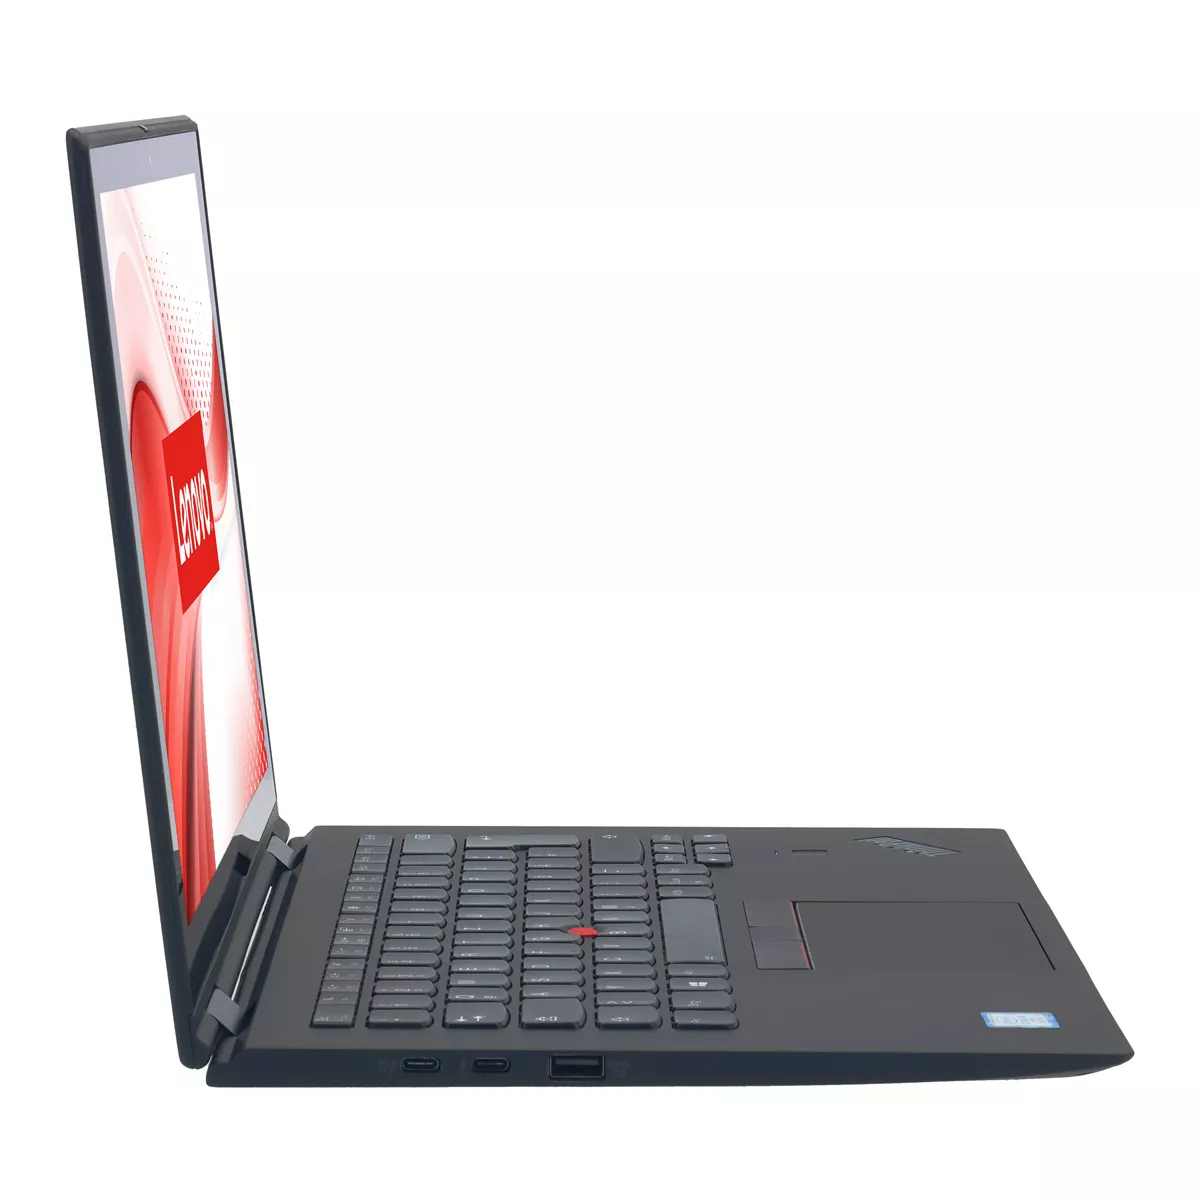 Lenovo ThinkPad X1 Yoga G3 Core i5 8350U Touch 240 GB M.2 SSD Webcam A